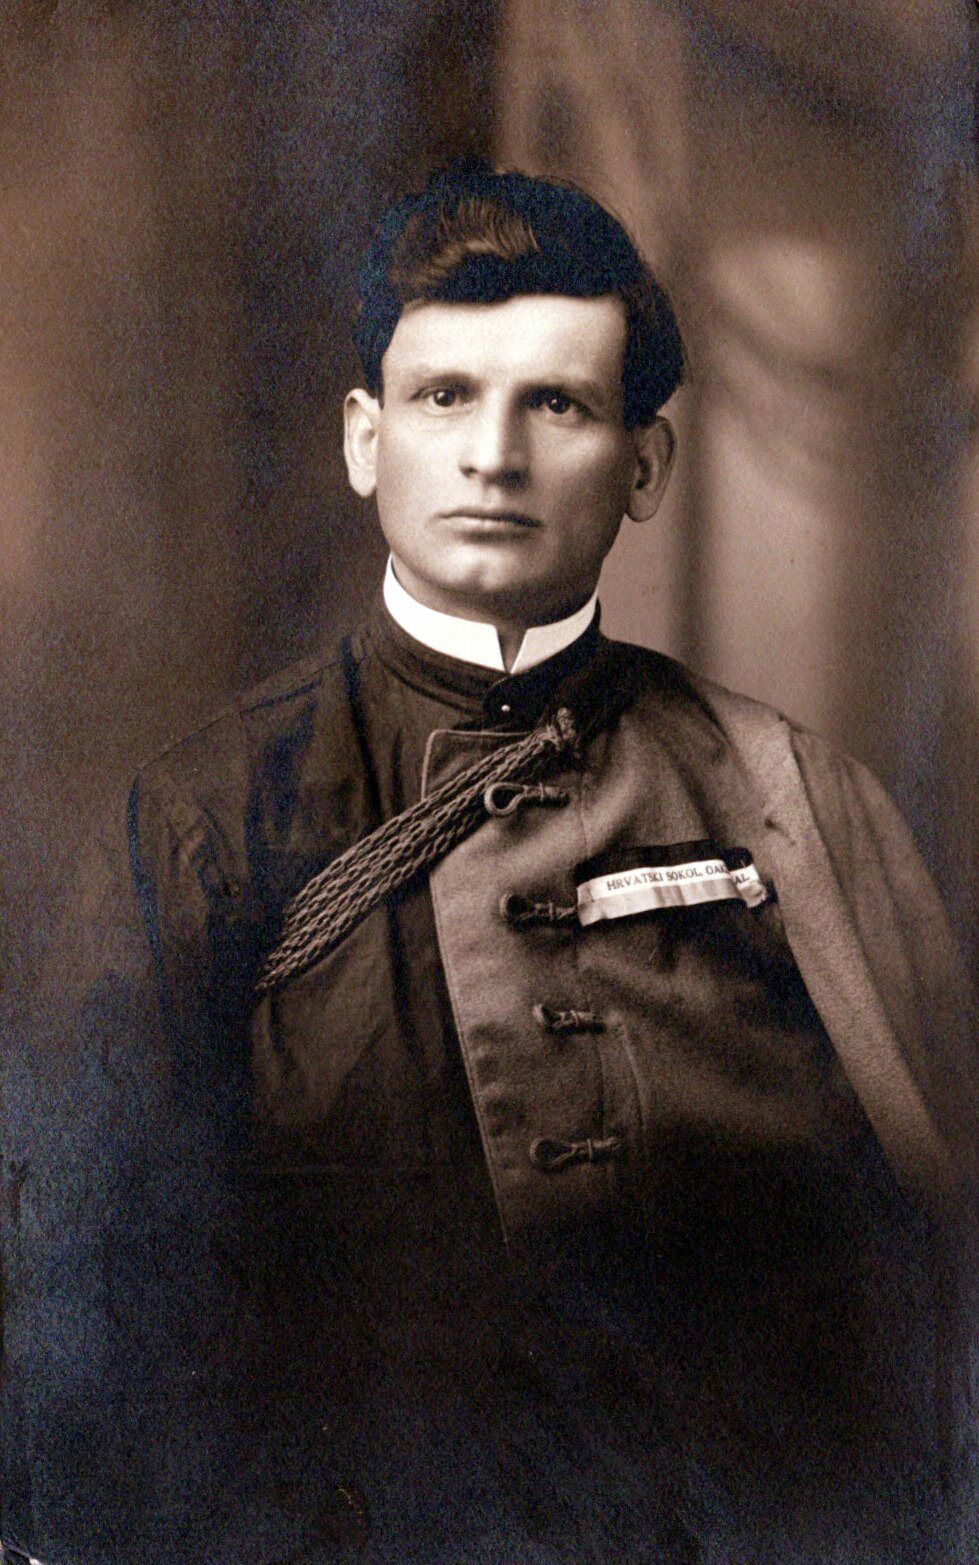 Man Hrvatski sokol 1914 Shoulder Uniform Croatian Vintage Real Photo Post Card